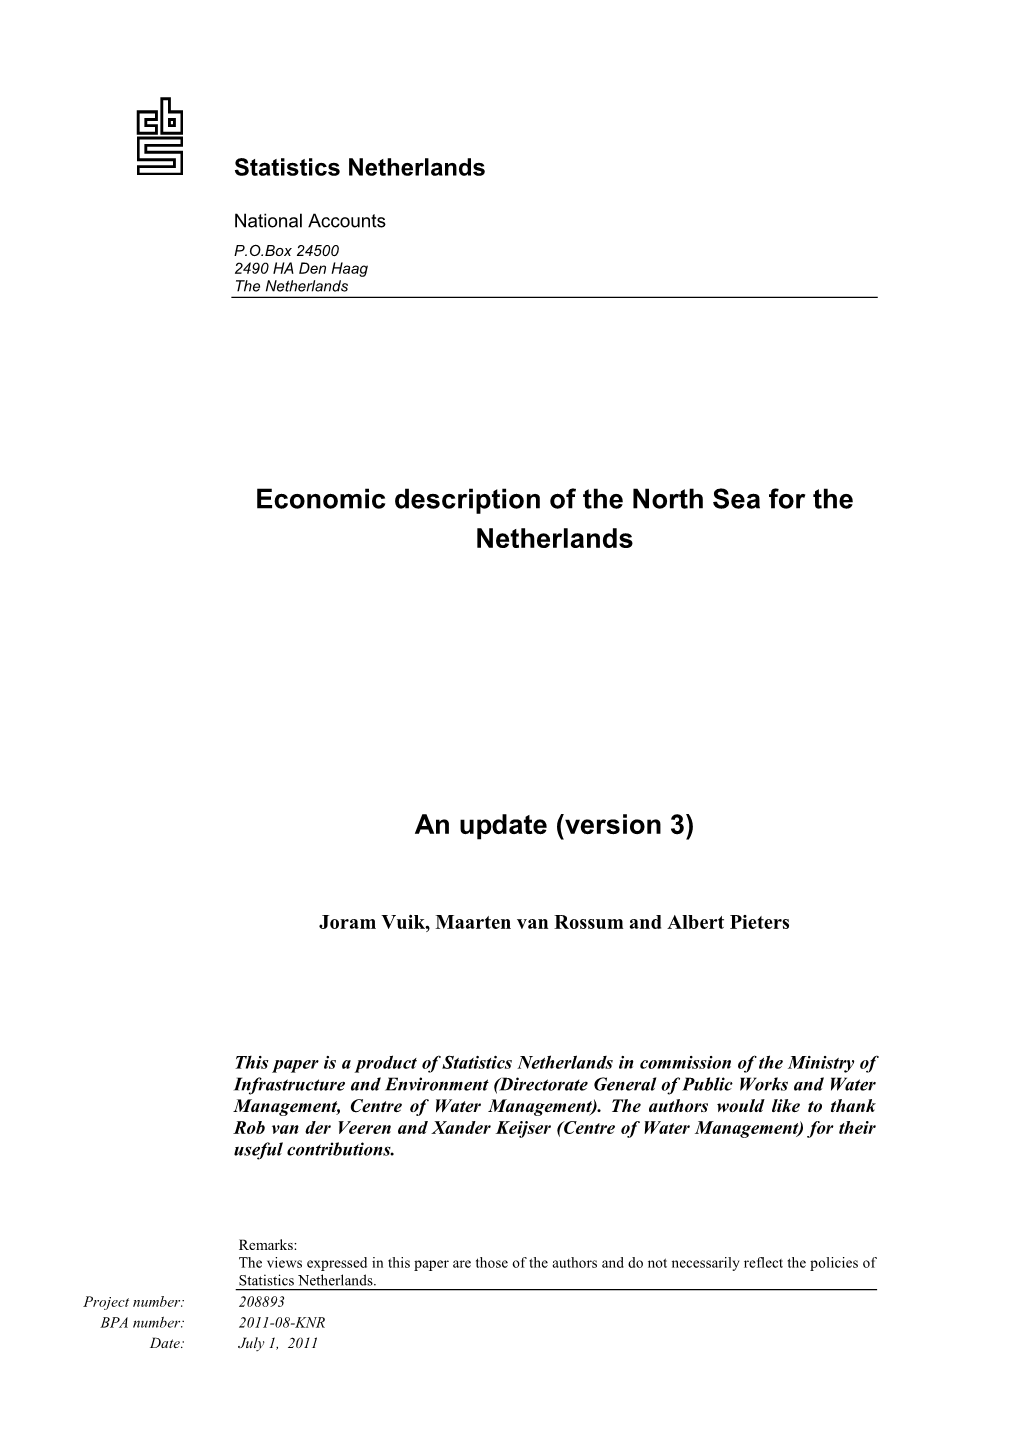 Economic Description of the North Sea for the Netherlands